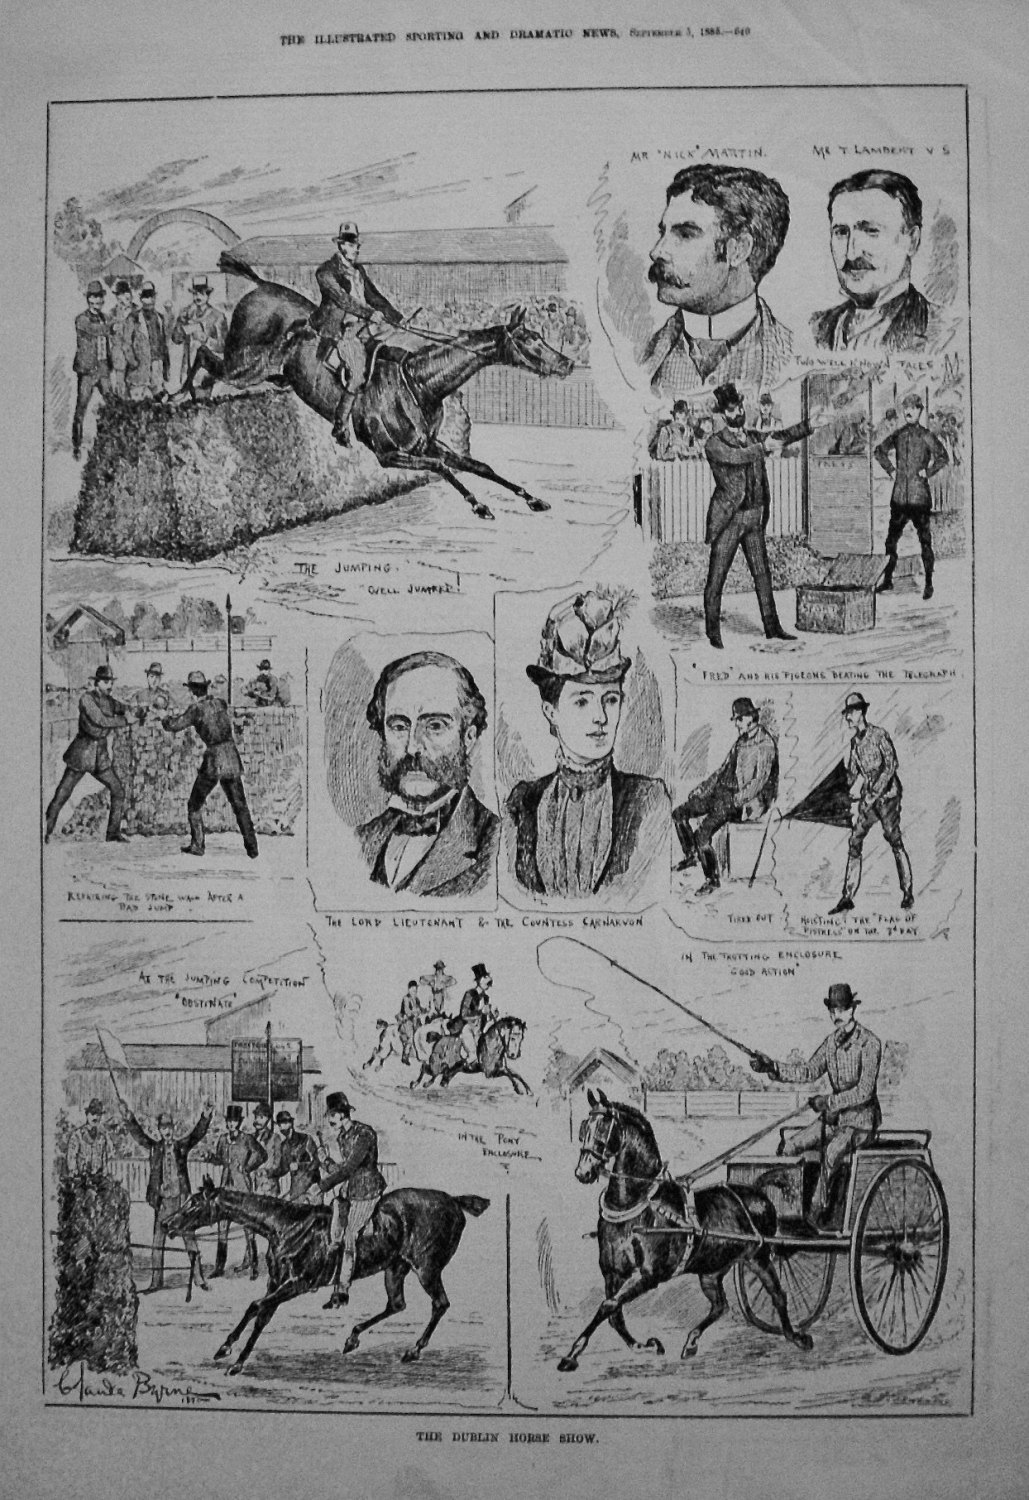 Dublin Horse Show. 1885